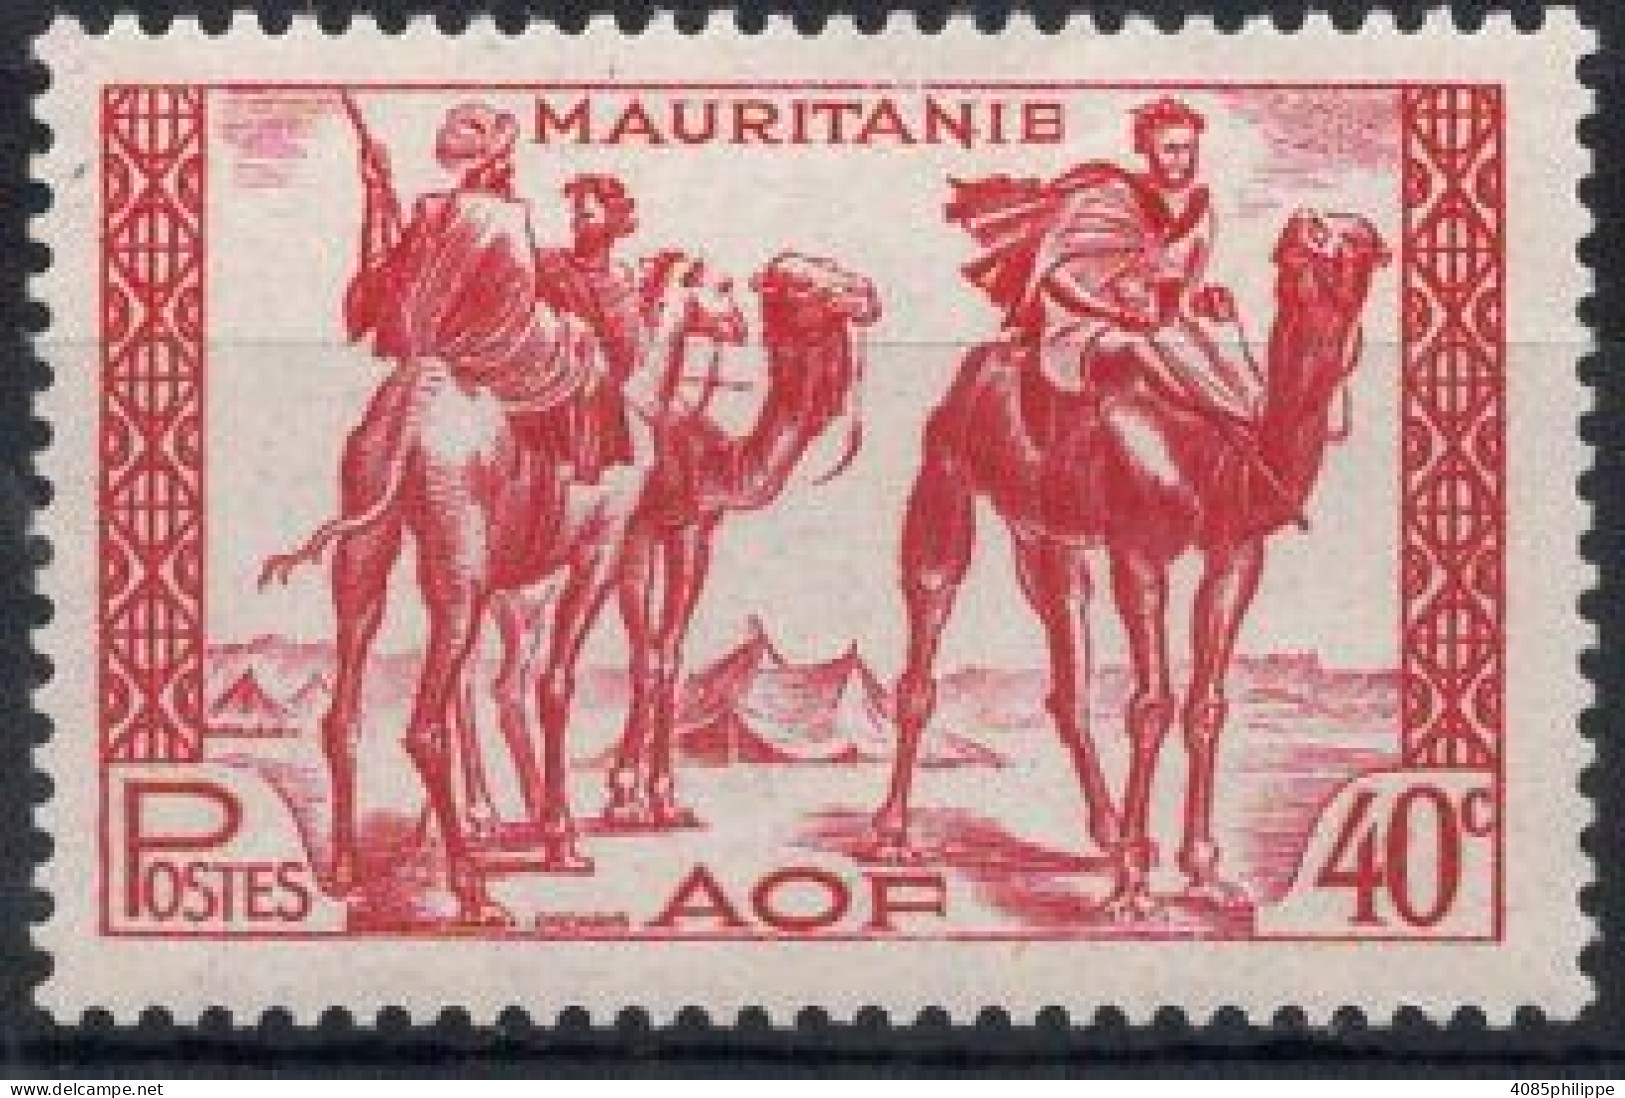 Mauritanie Timbre-poste N°127** Neuf Sans Charnière TB Cote : 3€00 - Nuovi